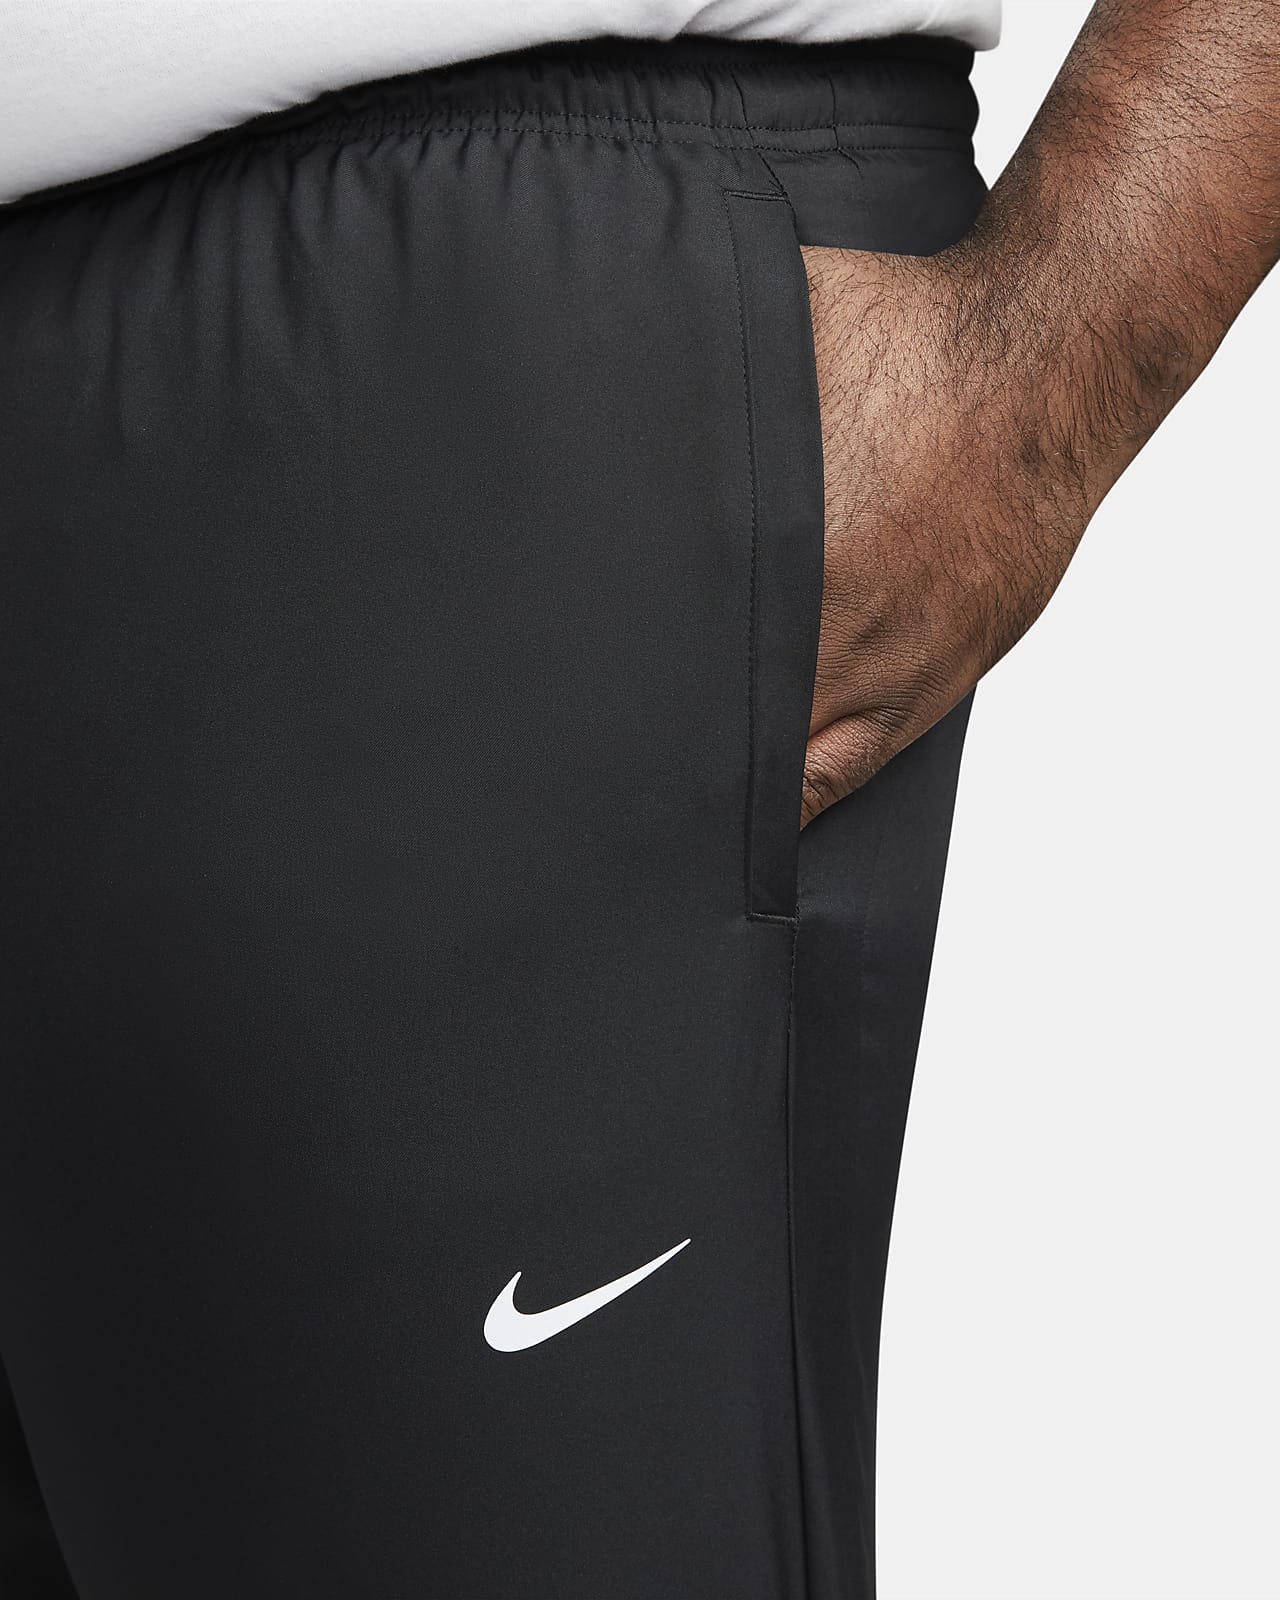 Nike Elite Sports Trousers  Men  FASHIOLAin